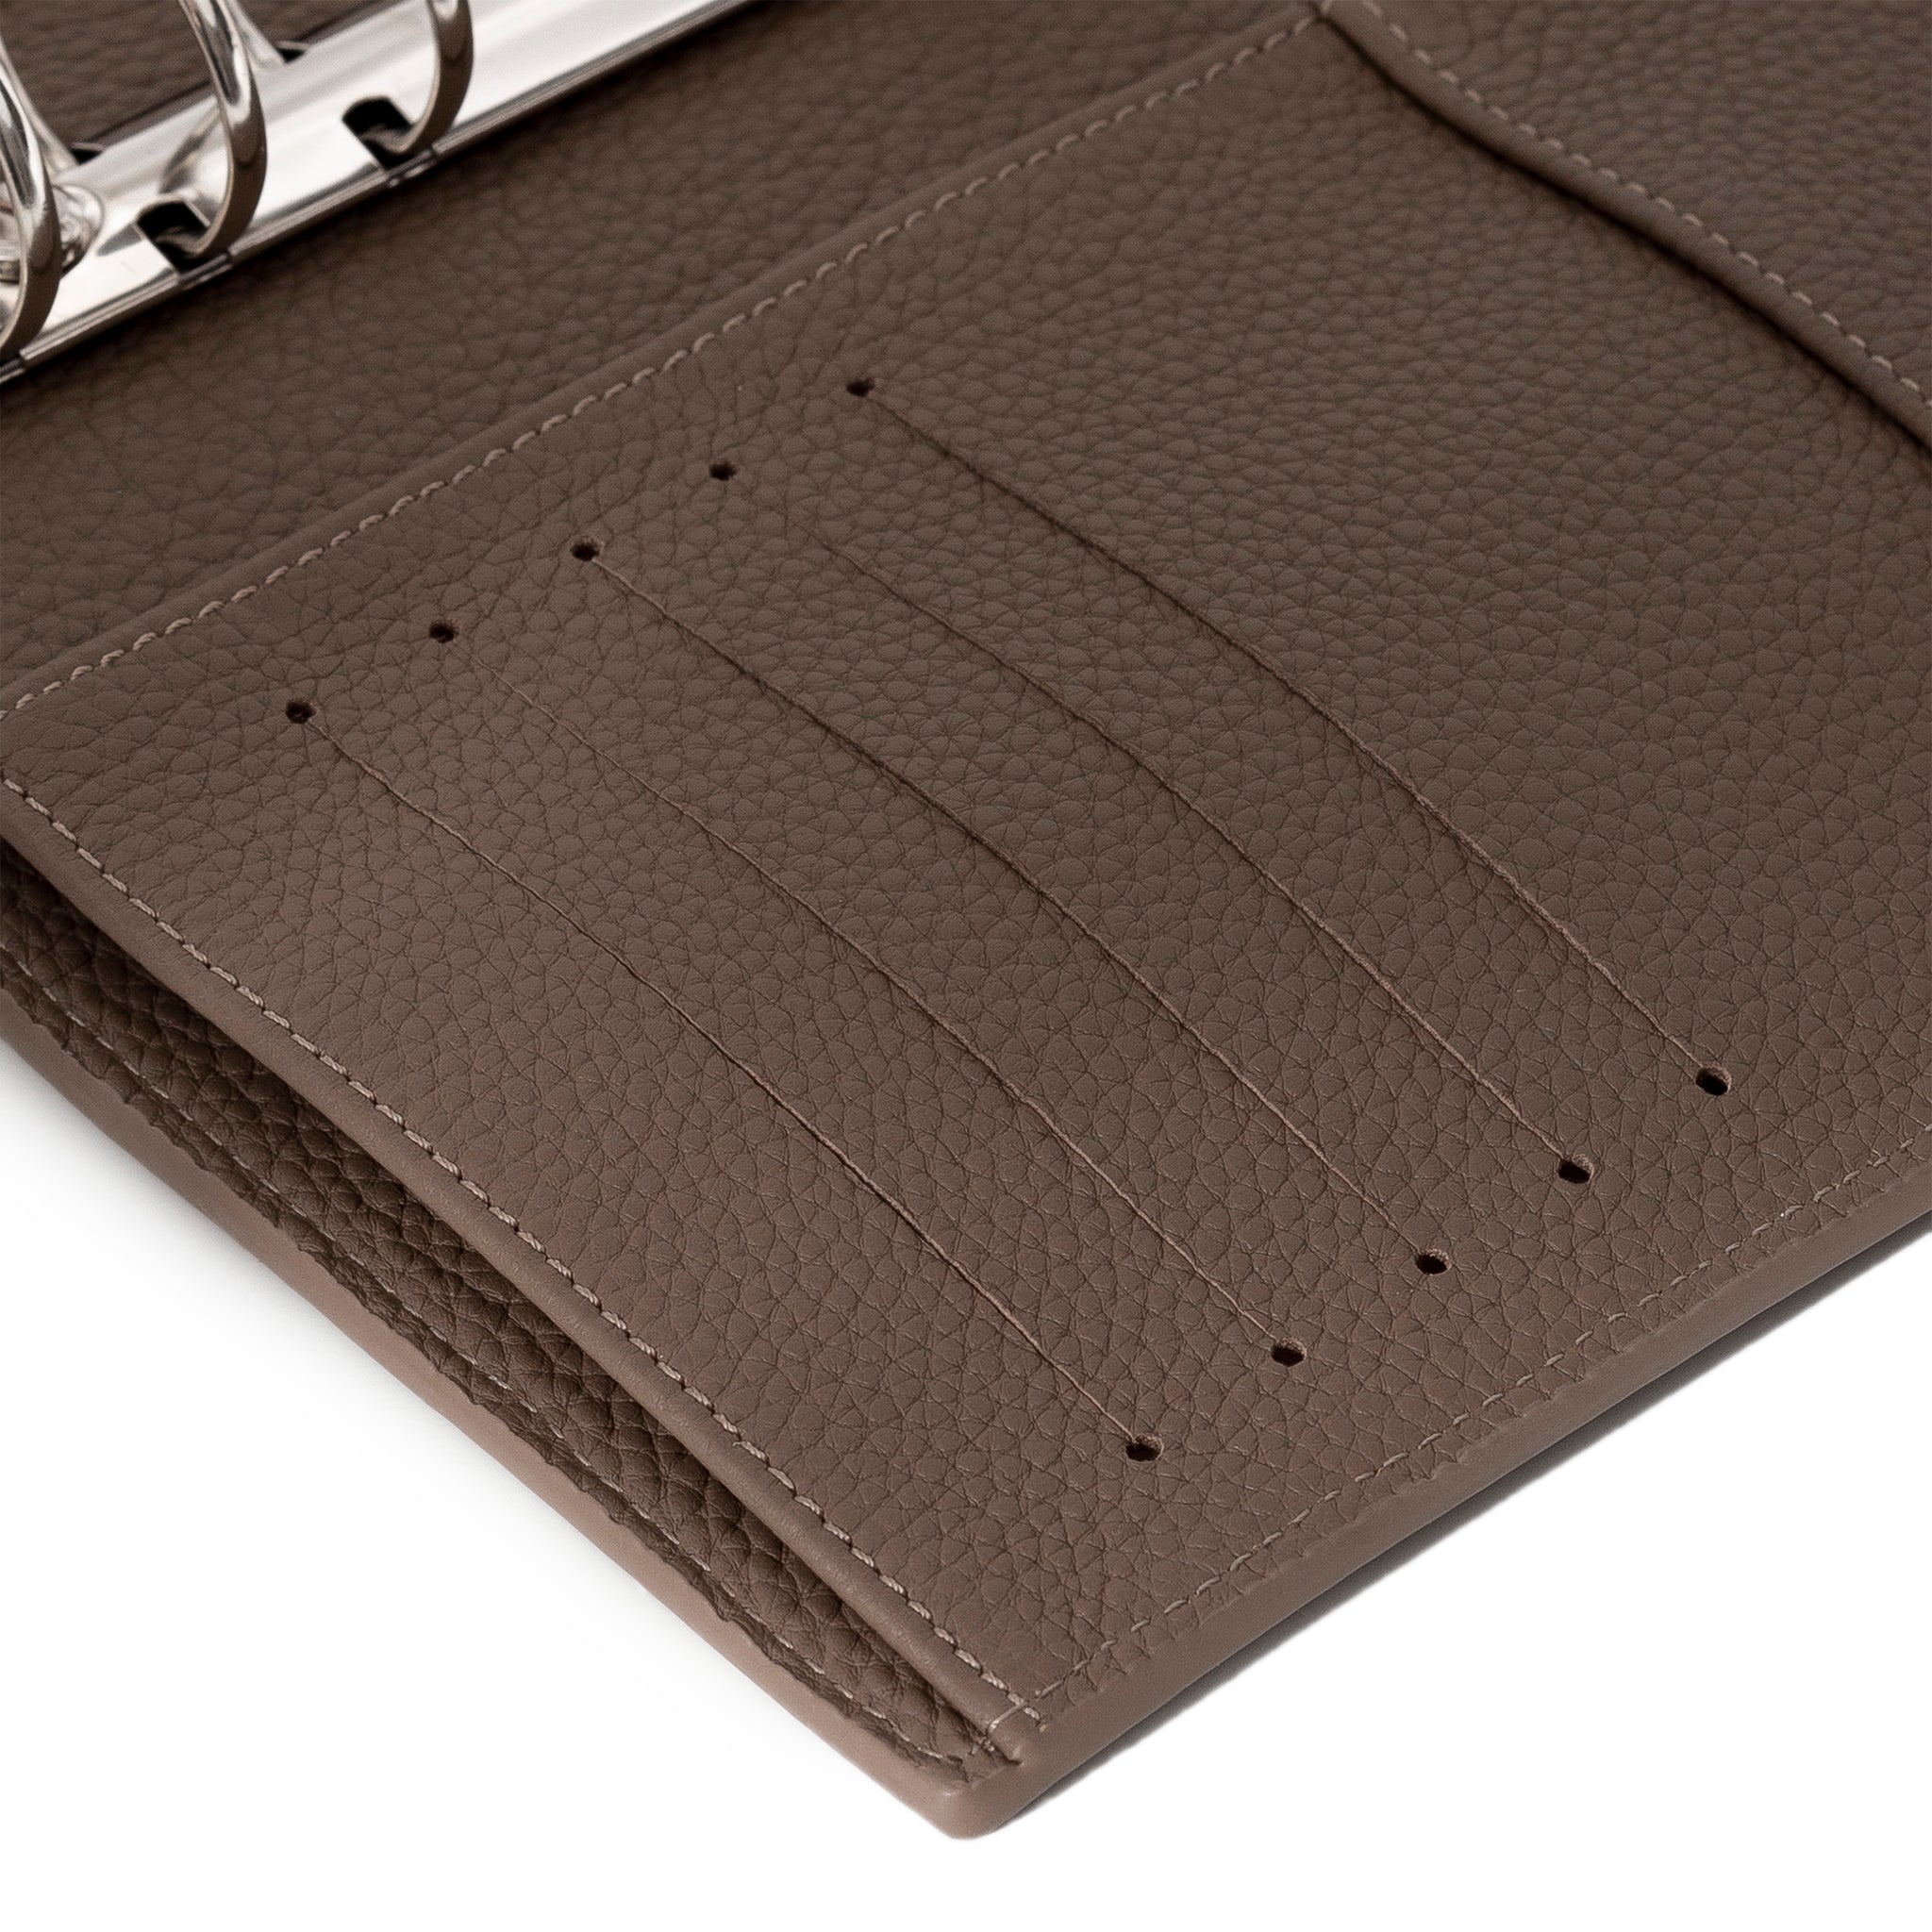 Foundations 6-Ring Leather Agenda | Personal | Cloth & Paper Cortado